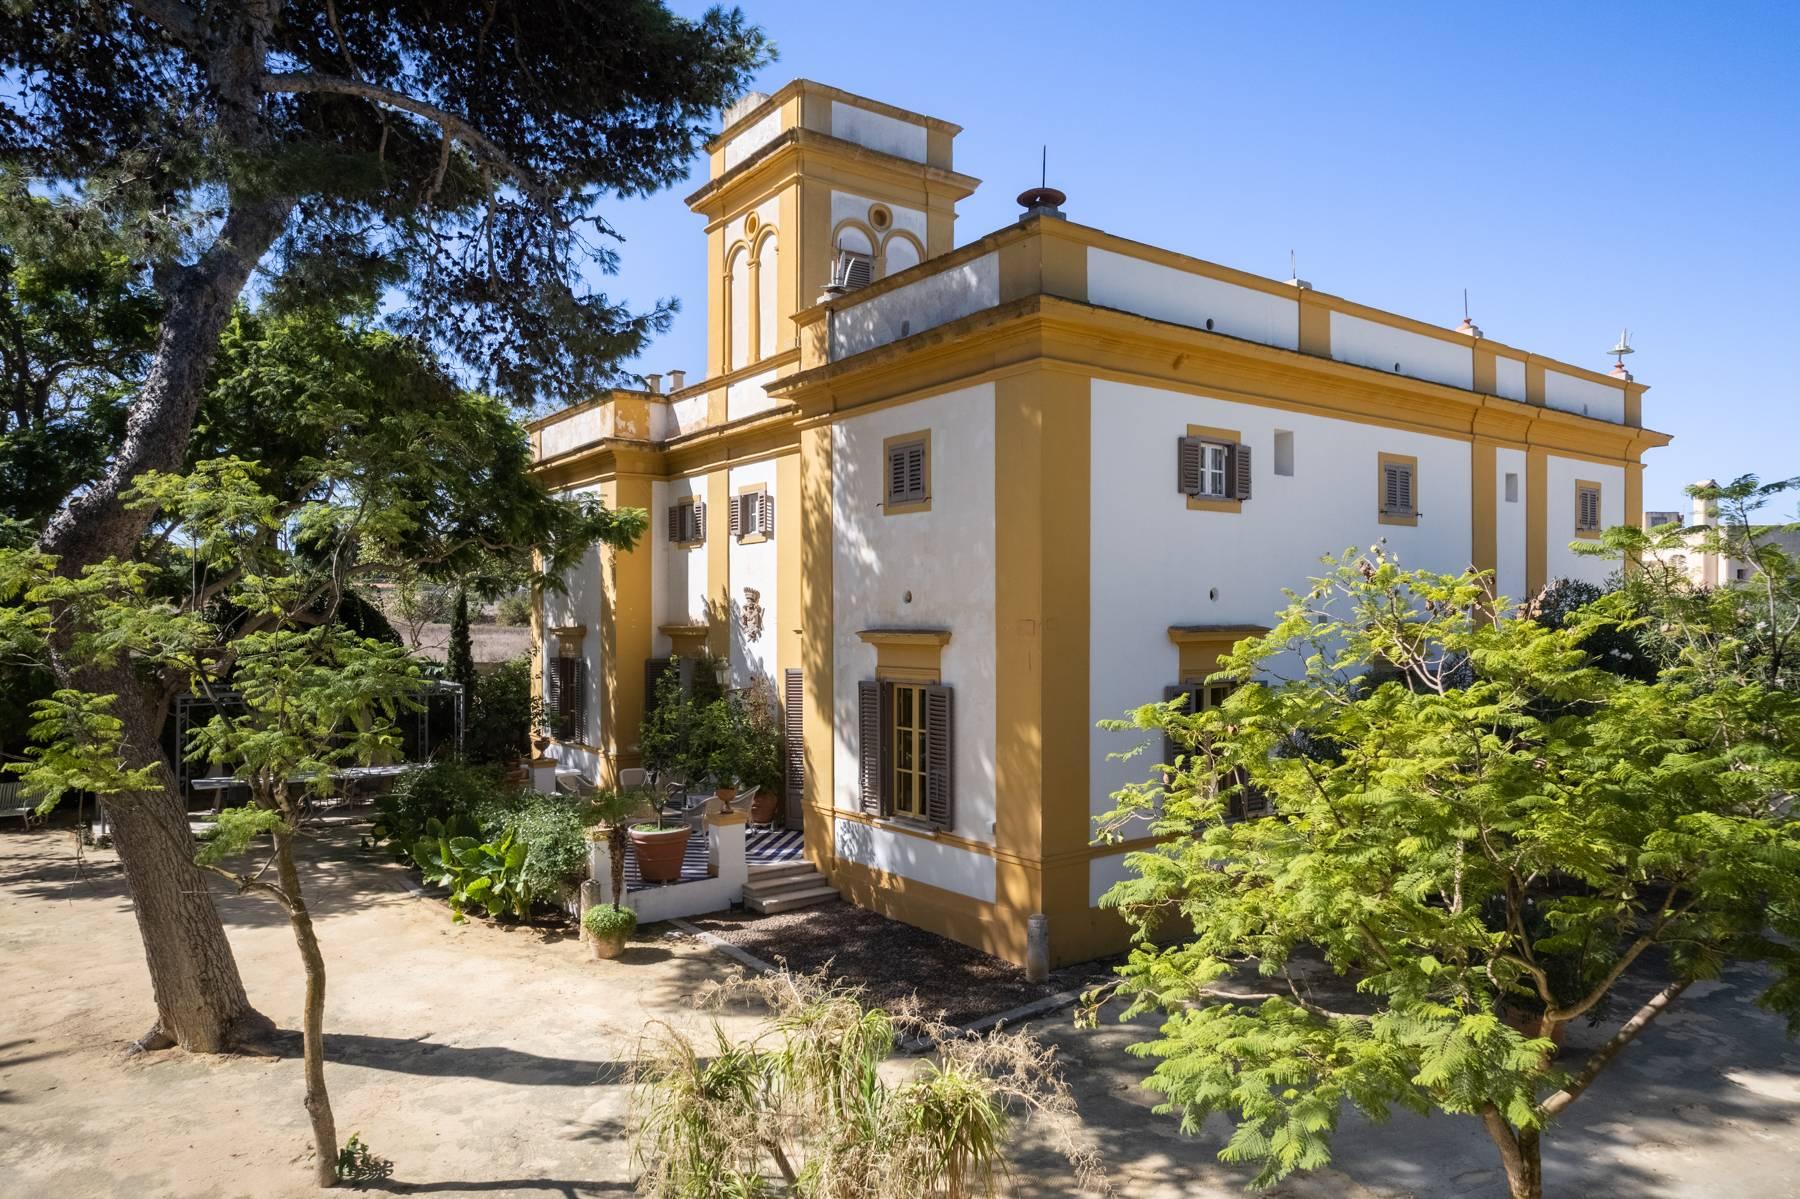 Magnifique villa historique à Marsala - 7